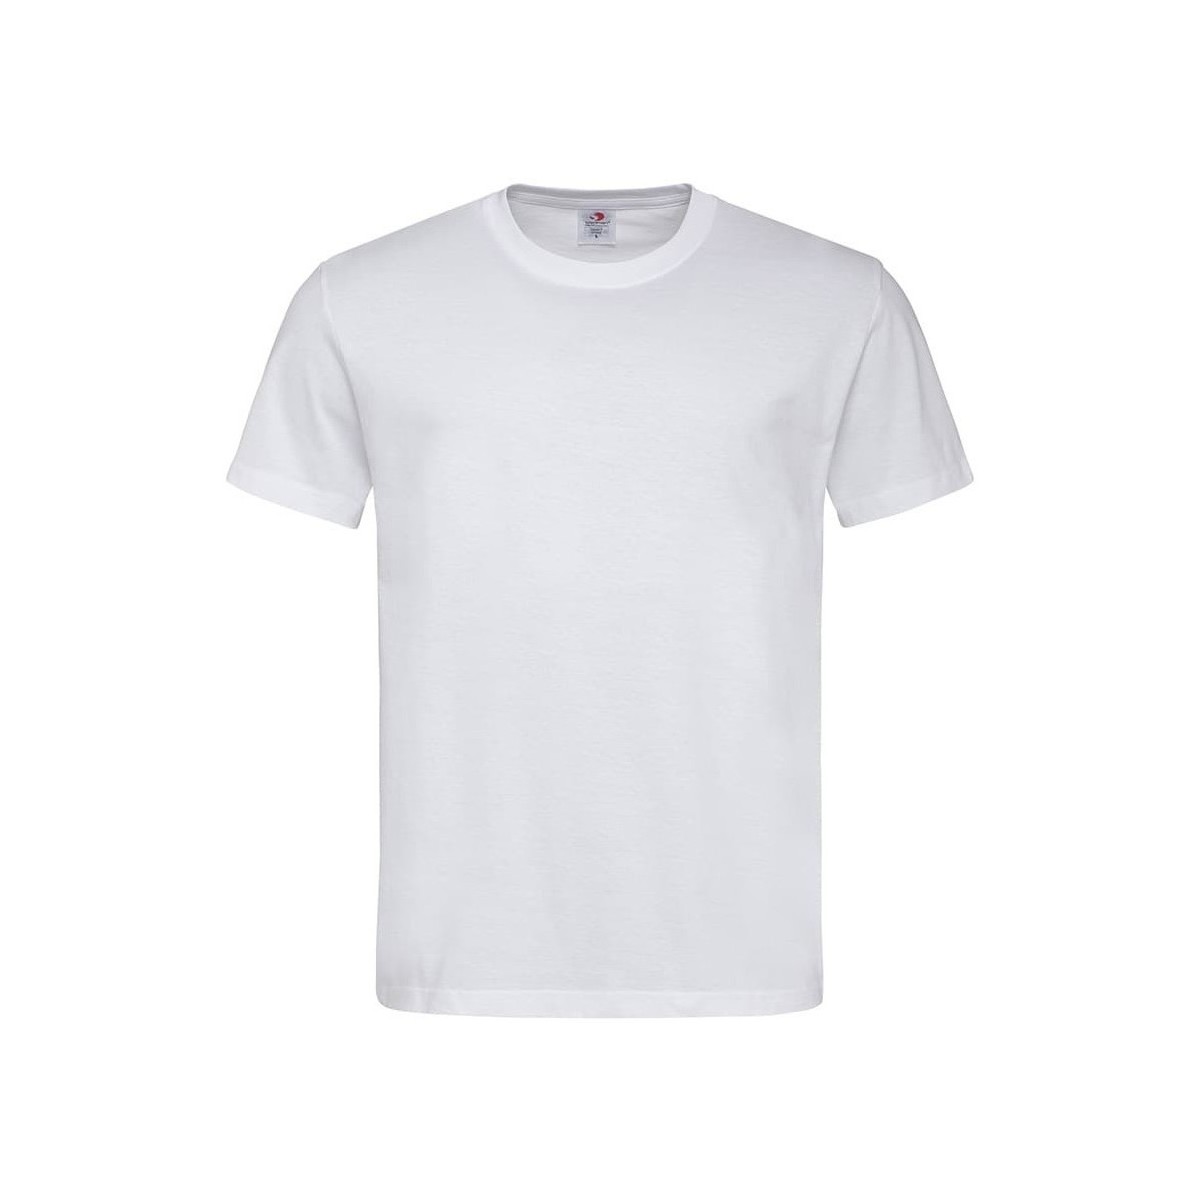 textil Camisetas manga larga Stedman Classic Blanco